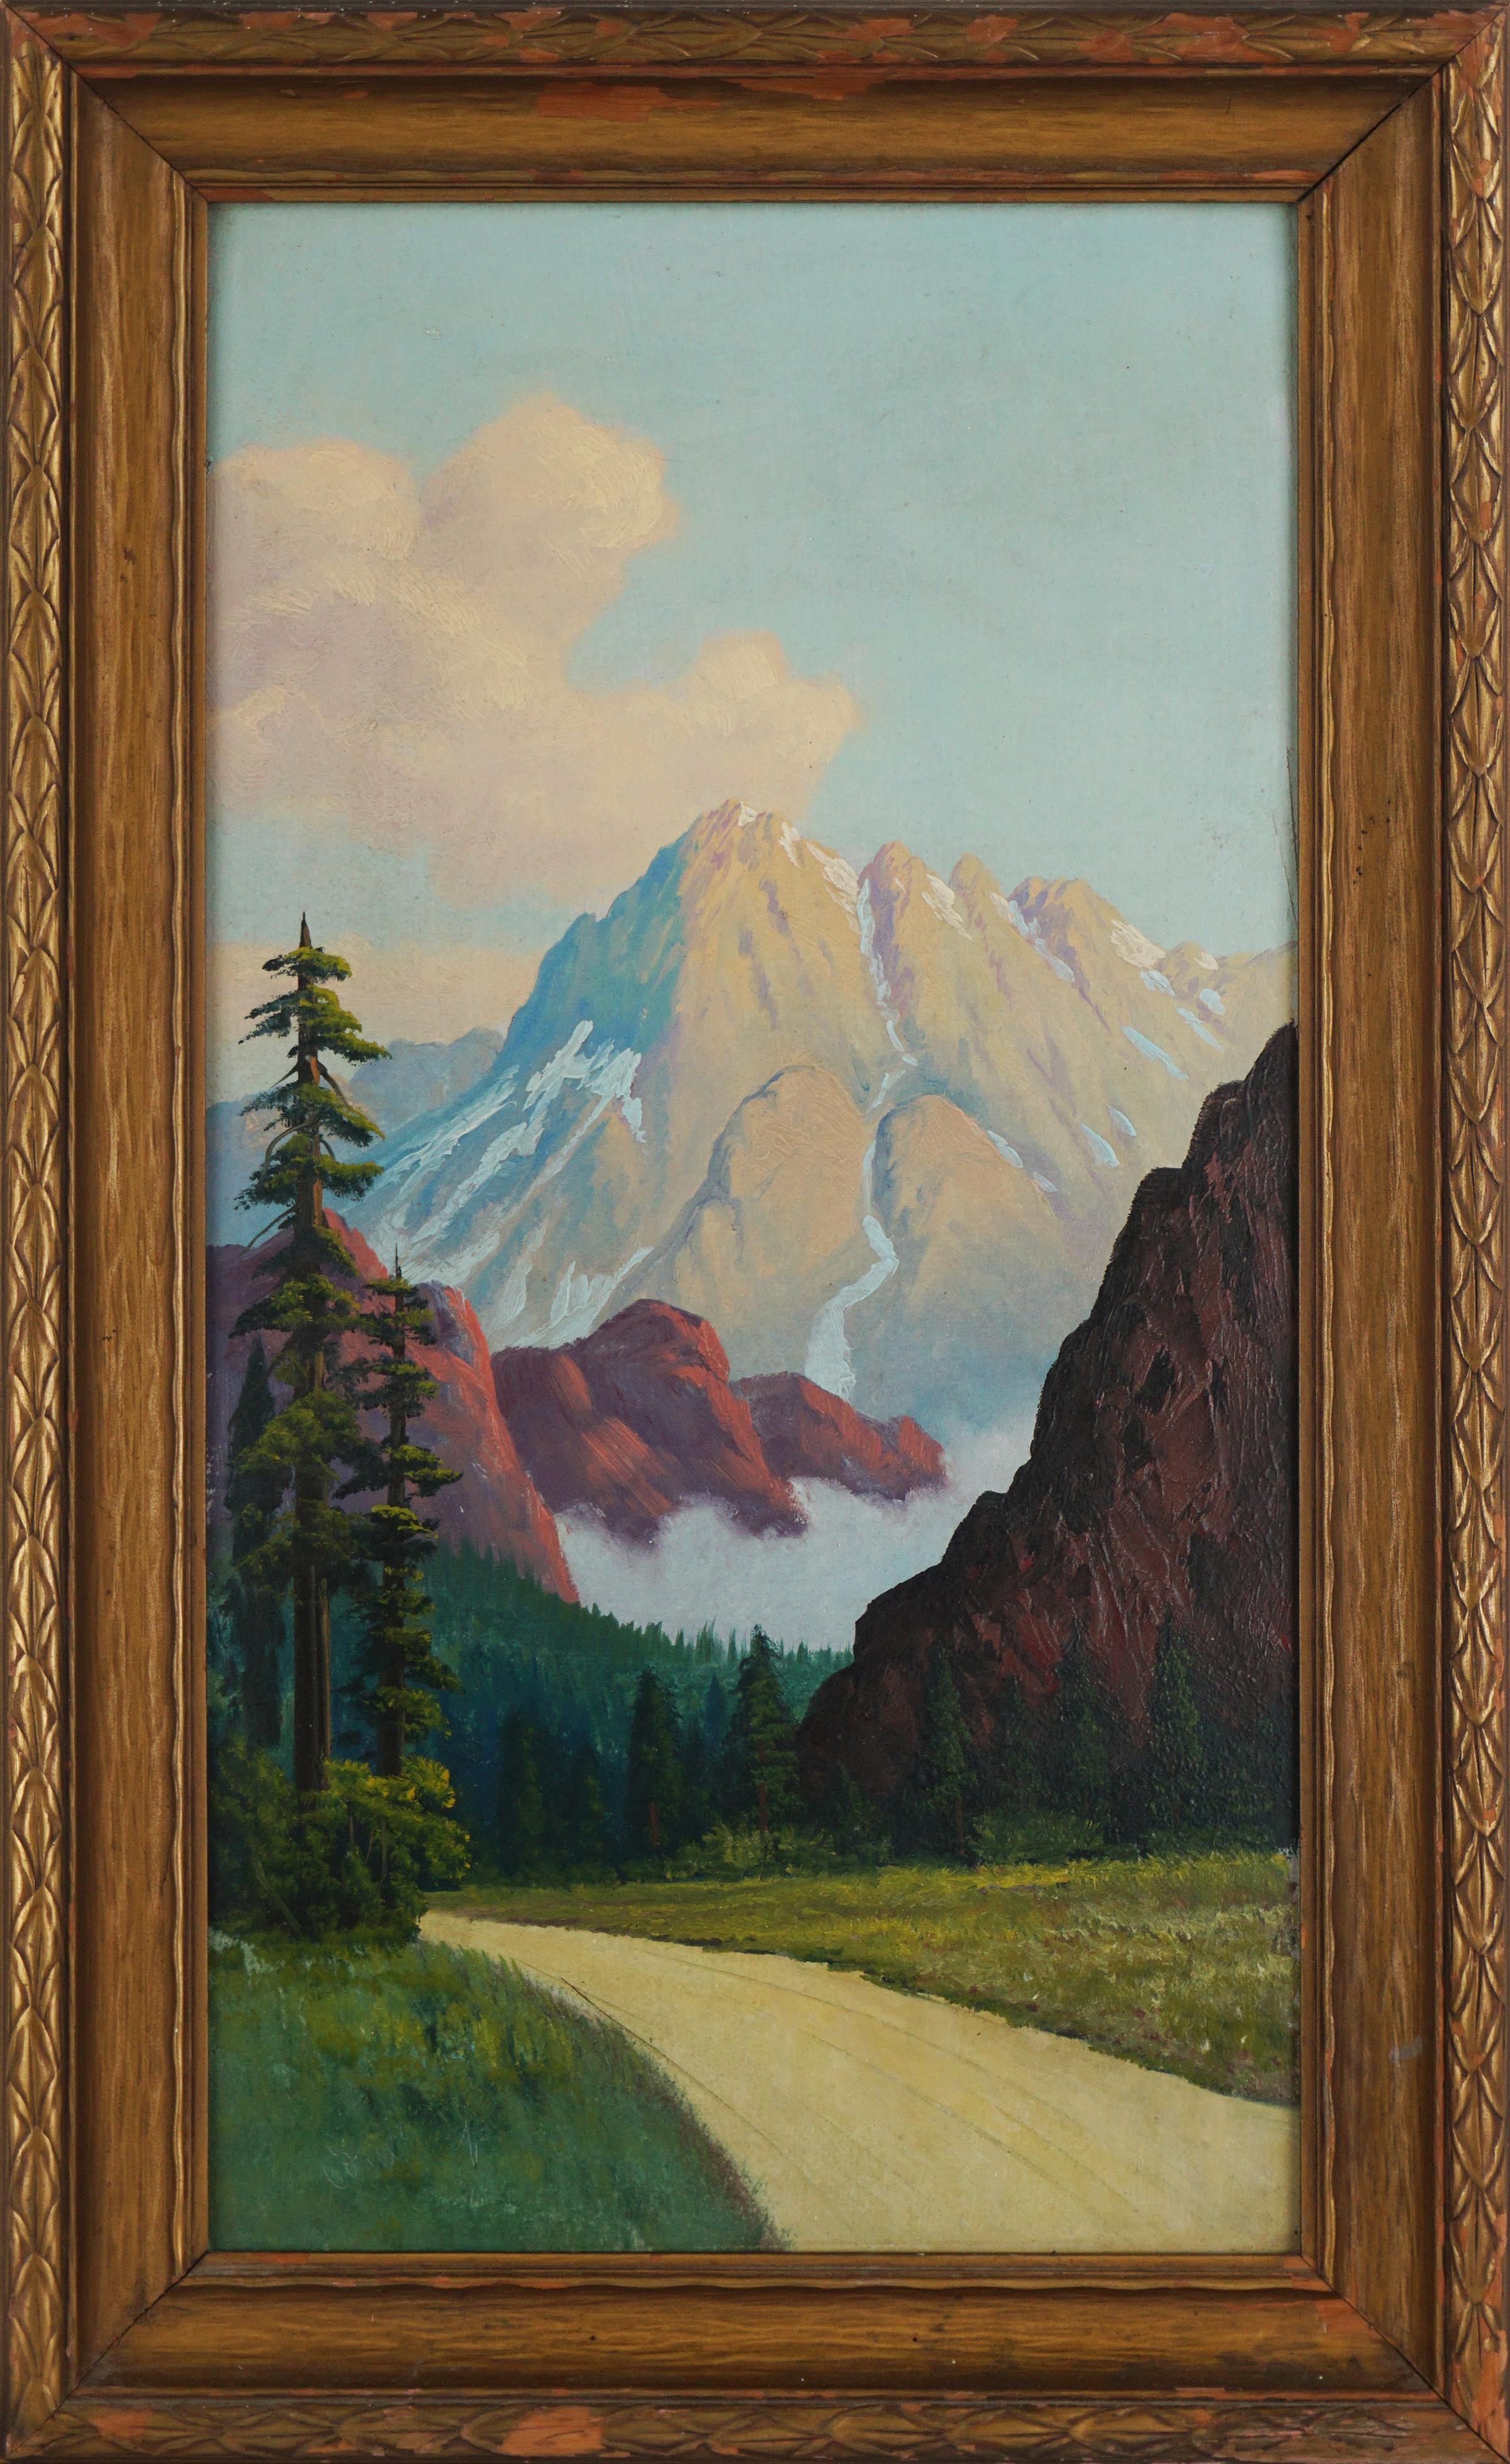 John Coultrup Landscape Painting – Road to Mount Whitney-Landschaft aus der Mitte des Jahrhunderts